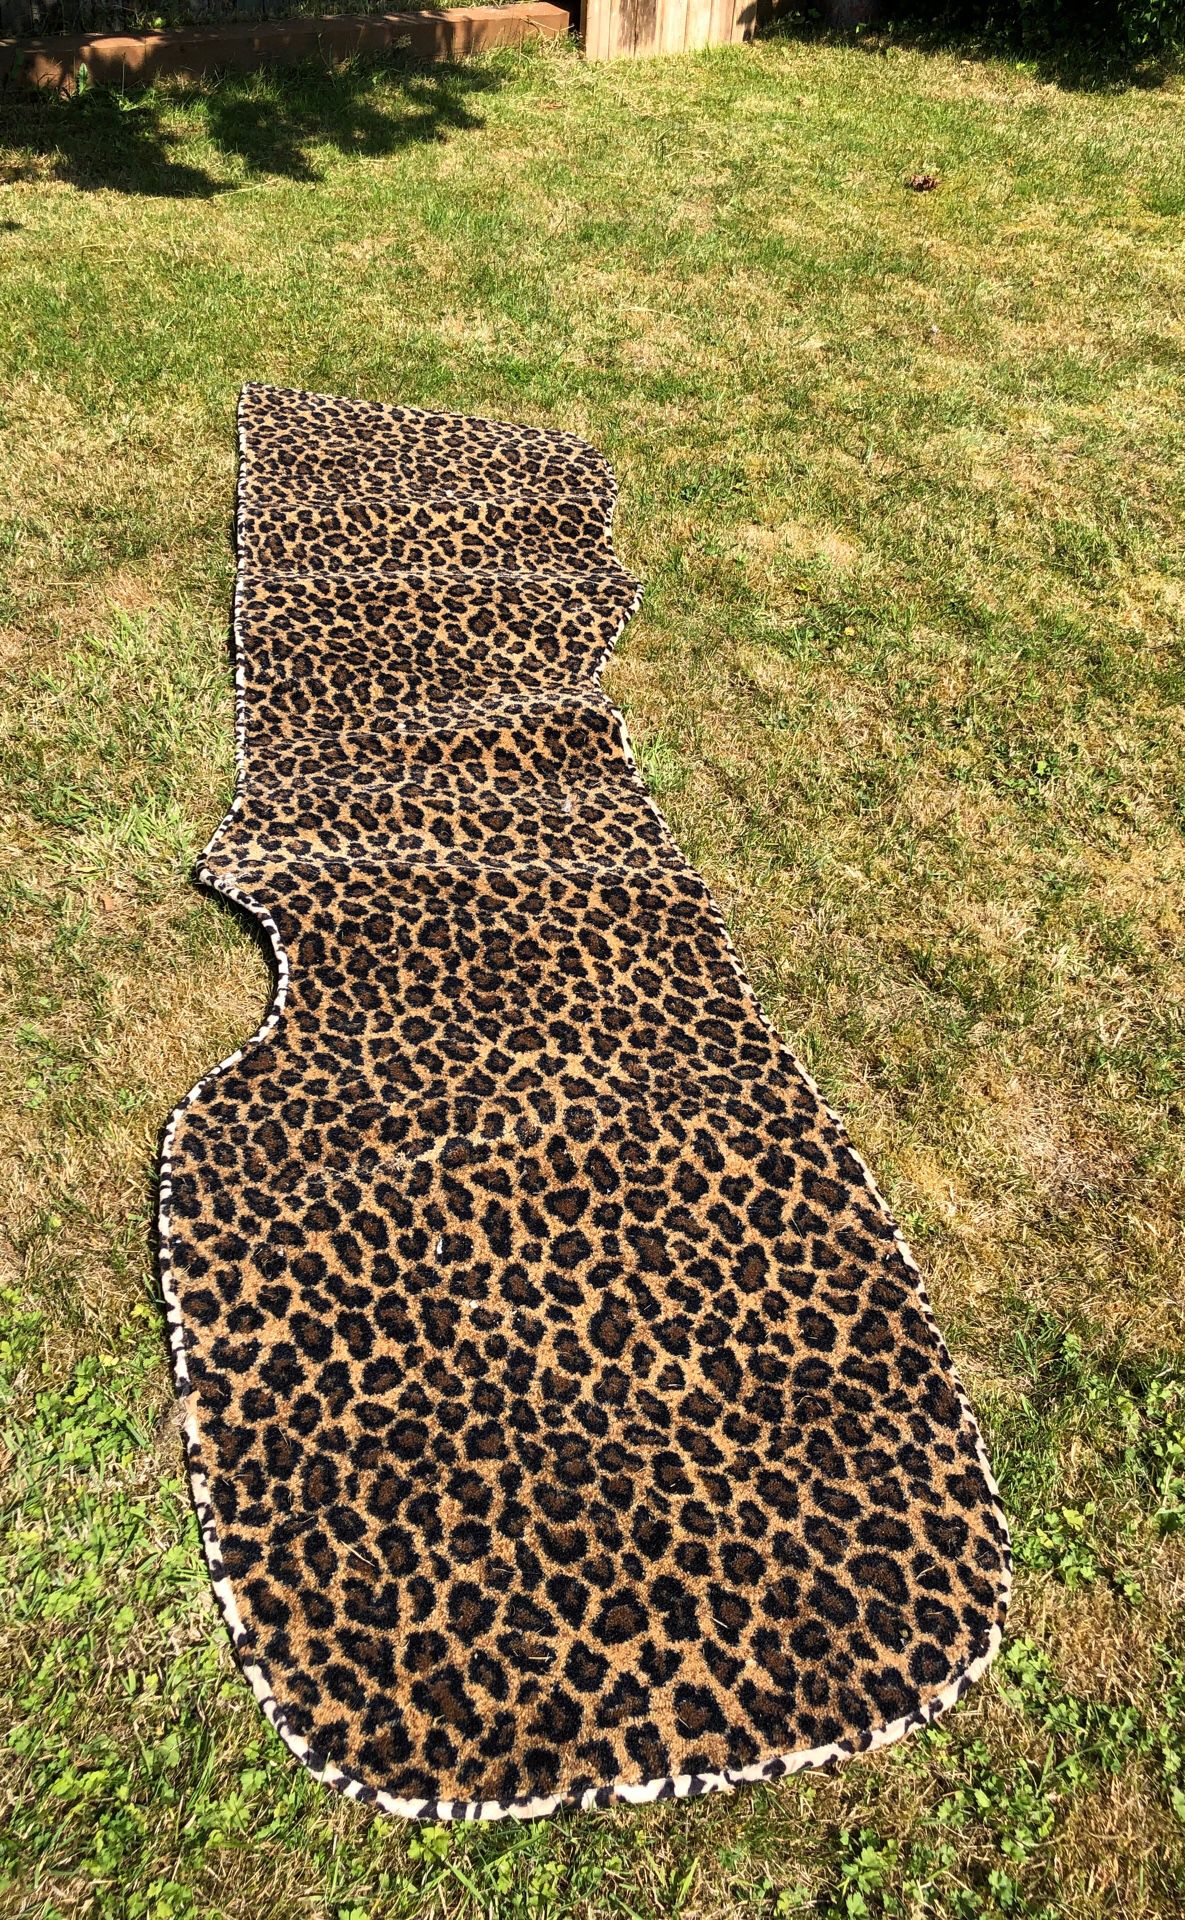 Leopard carpet runner for and RV, cabin, boat, limo, van, etc